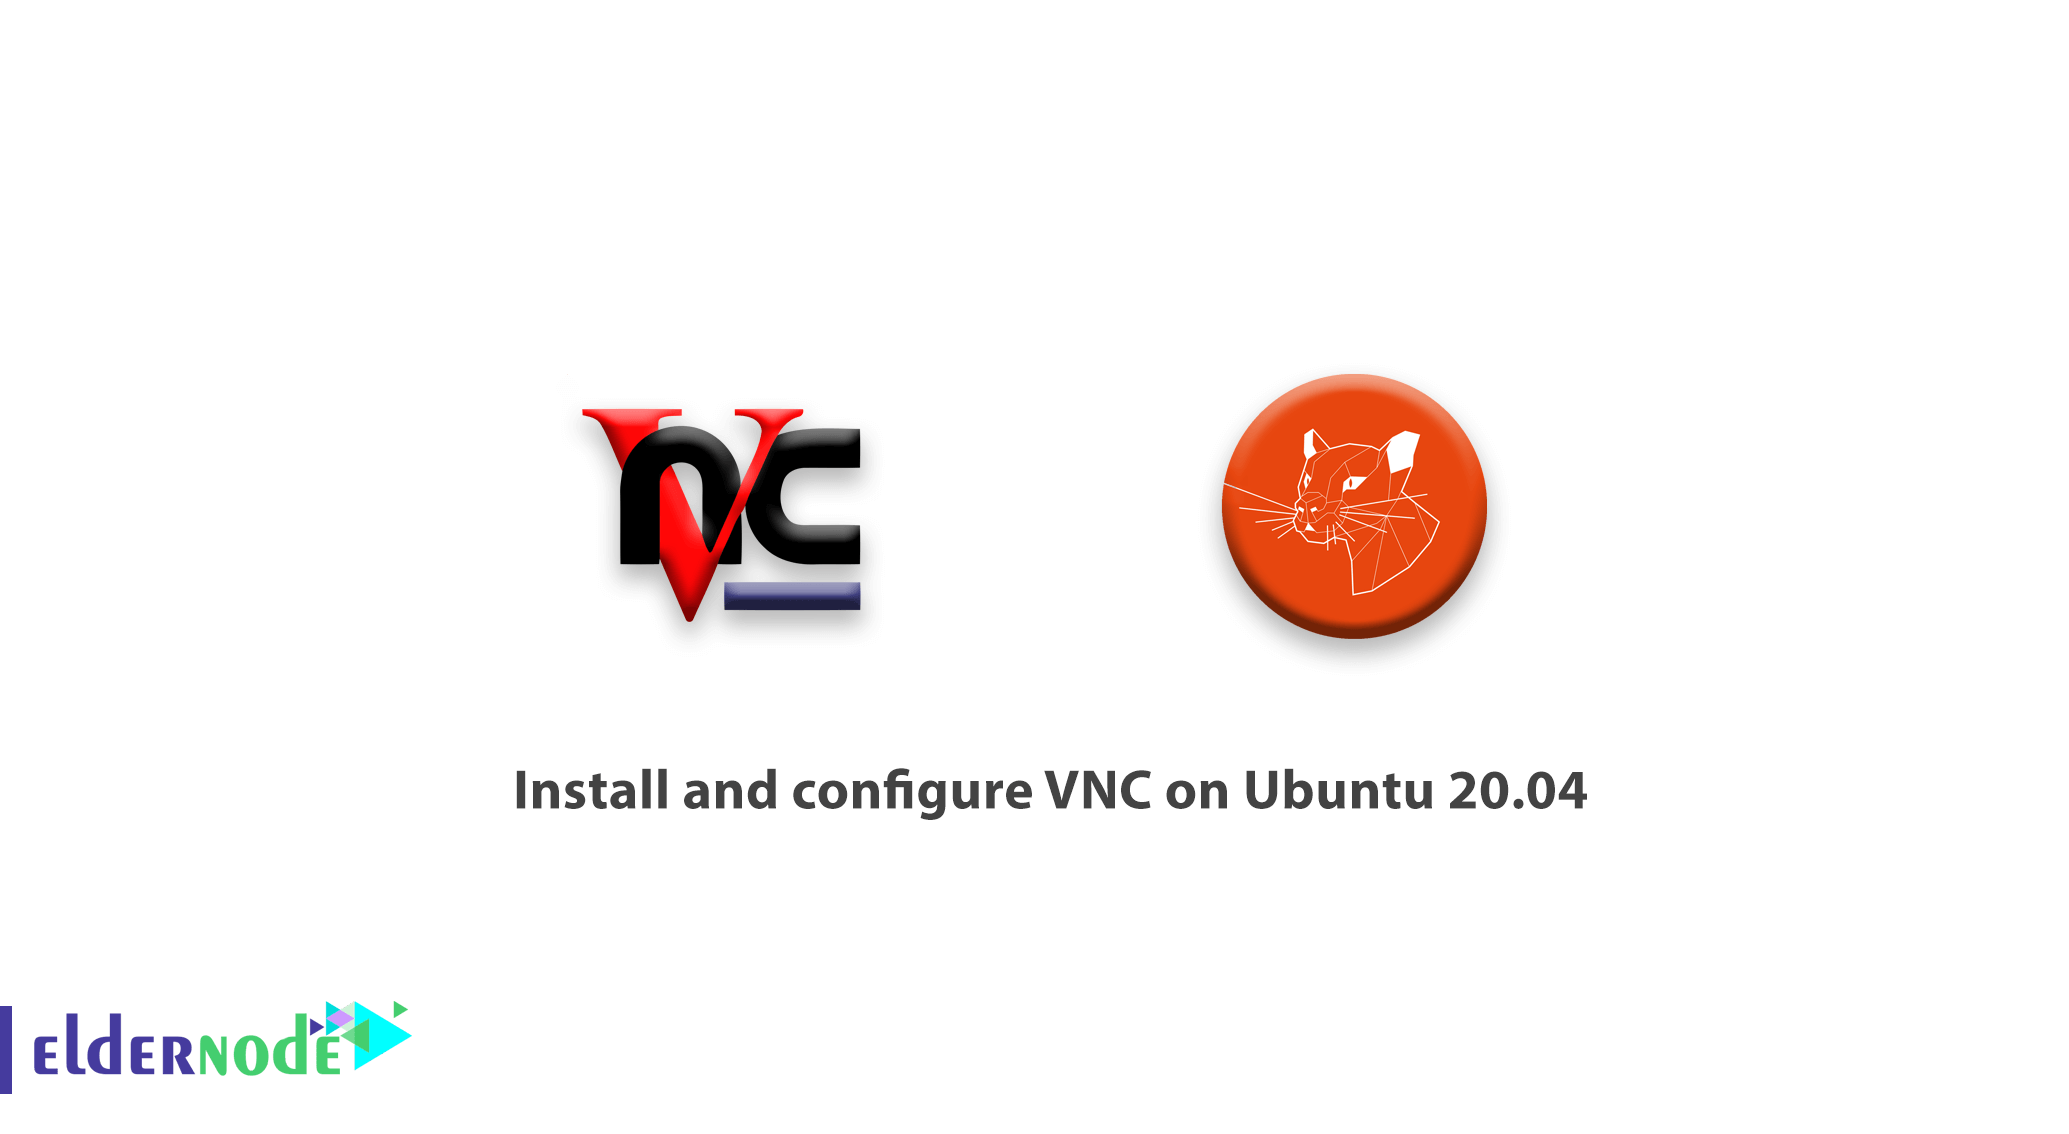 vnc viewer ubuntu 20.04